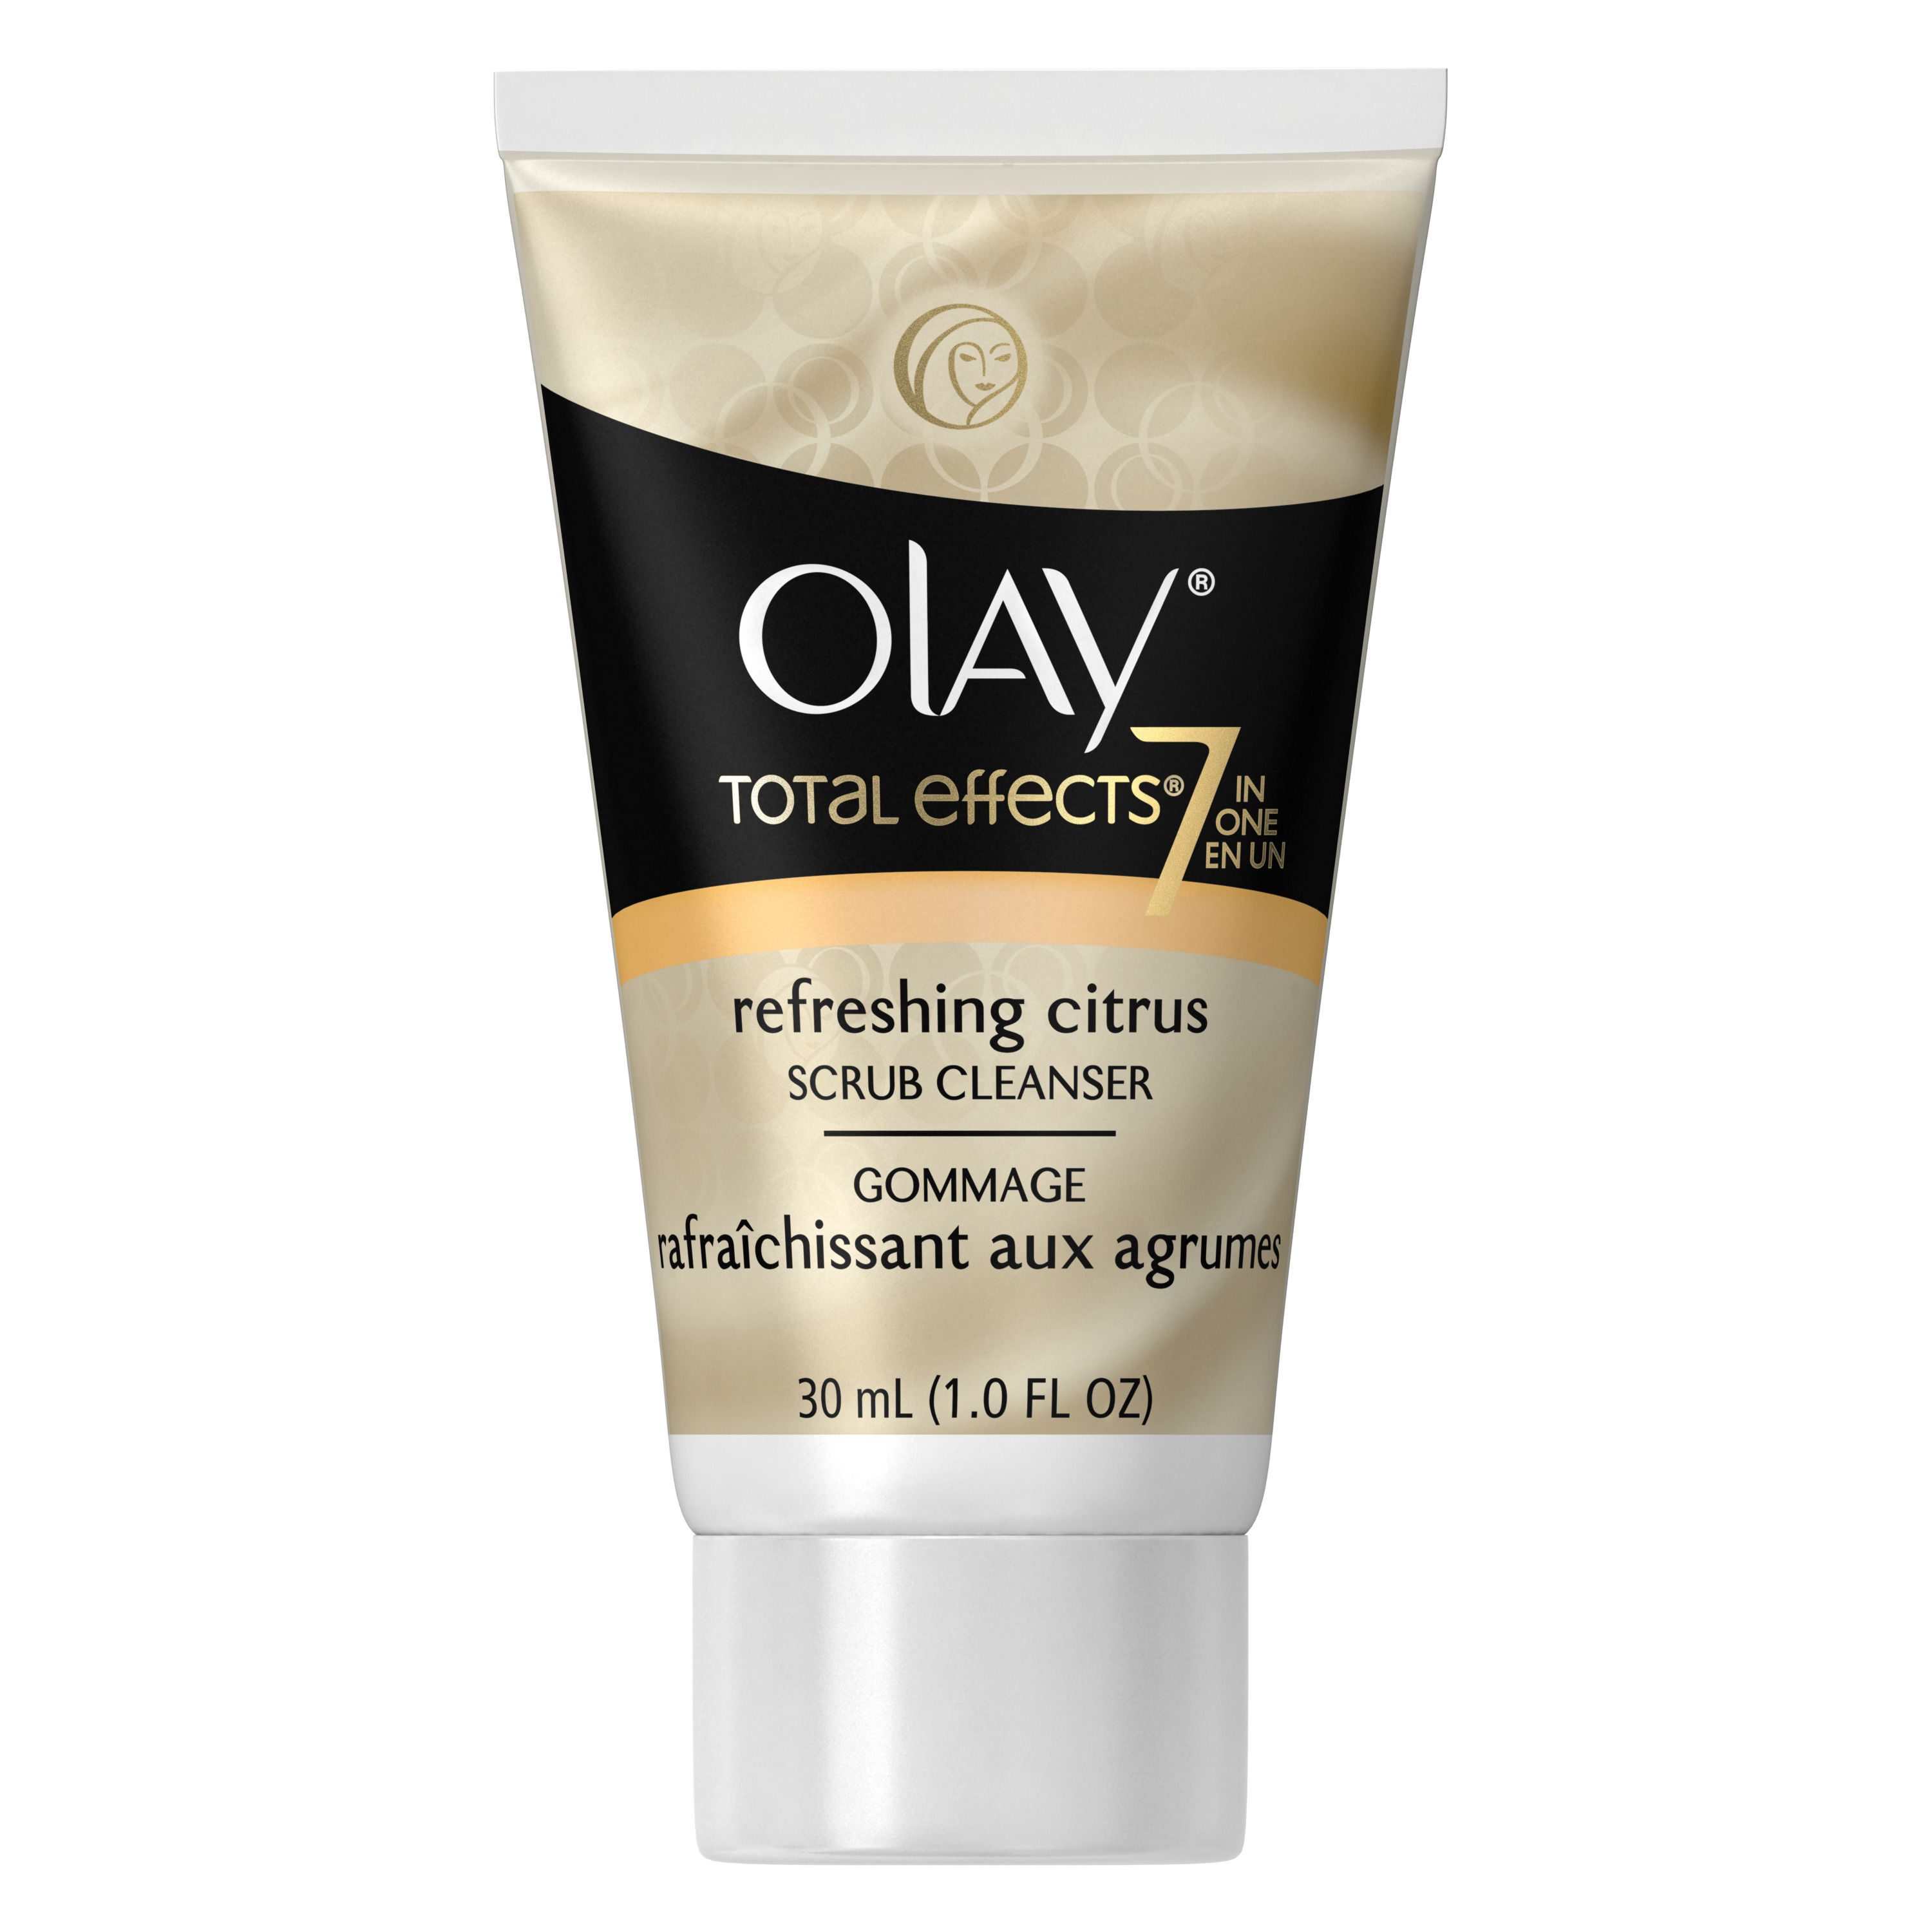 Olay Total Effects Refreshing Citrus Scrub Cleanser, 1.0 fl oz